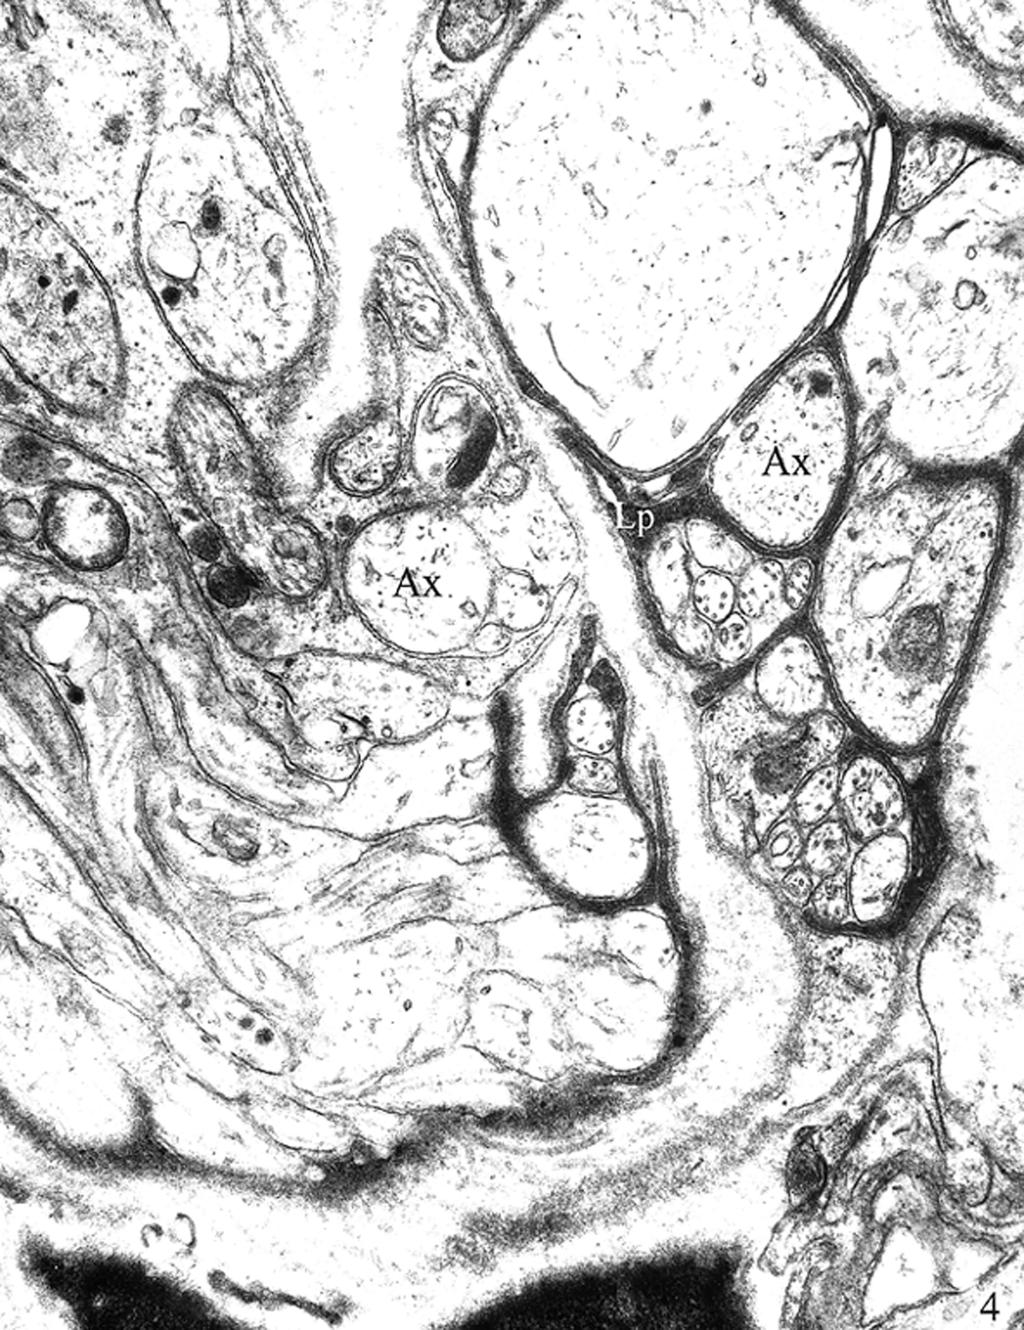 Małgorzata Bruska et al., Human foetal hypogastric nerves Figure 4. The right hypogastric nerve in a human foetus at 23 weeks; Ax axon, Lp lemmocyte process. 42000.